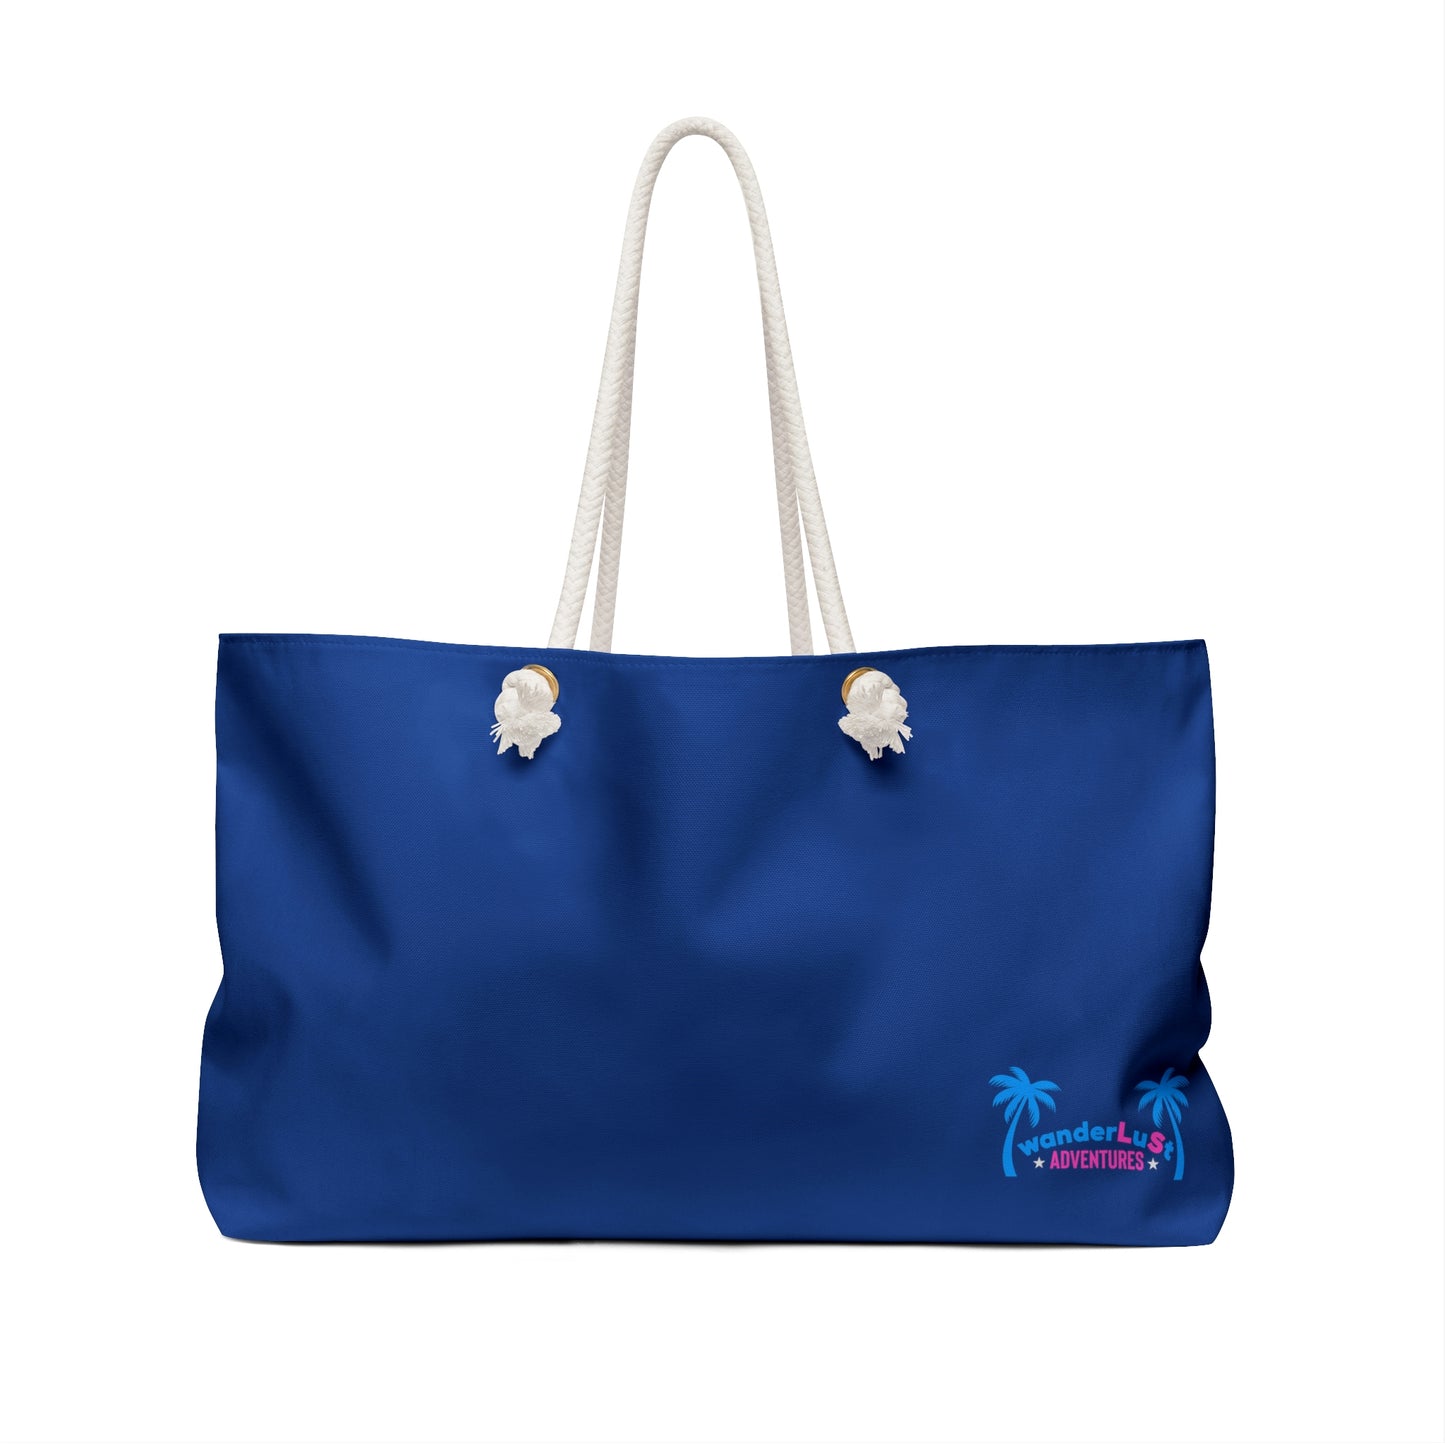 wanderLuSt ADVENTURES Royal Small Logo Weekender Lifestyle Beach Travel Bag